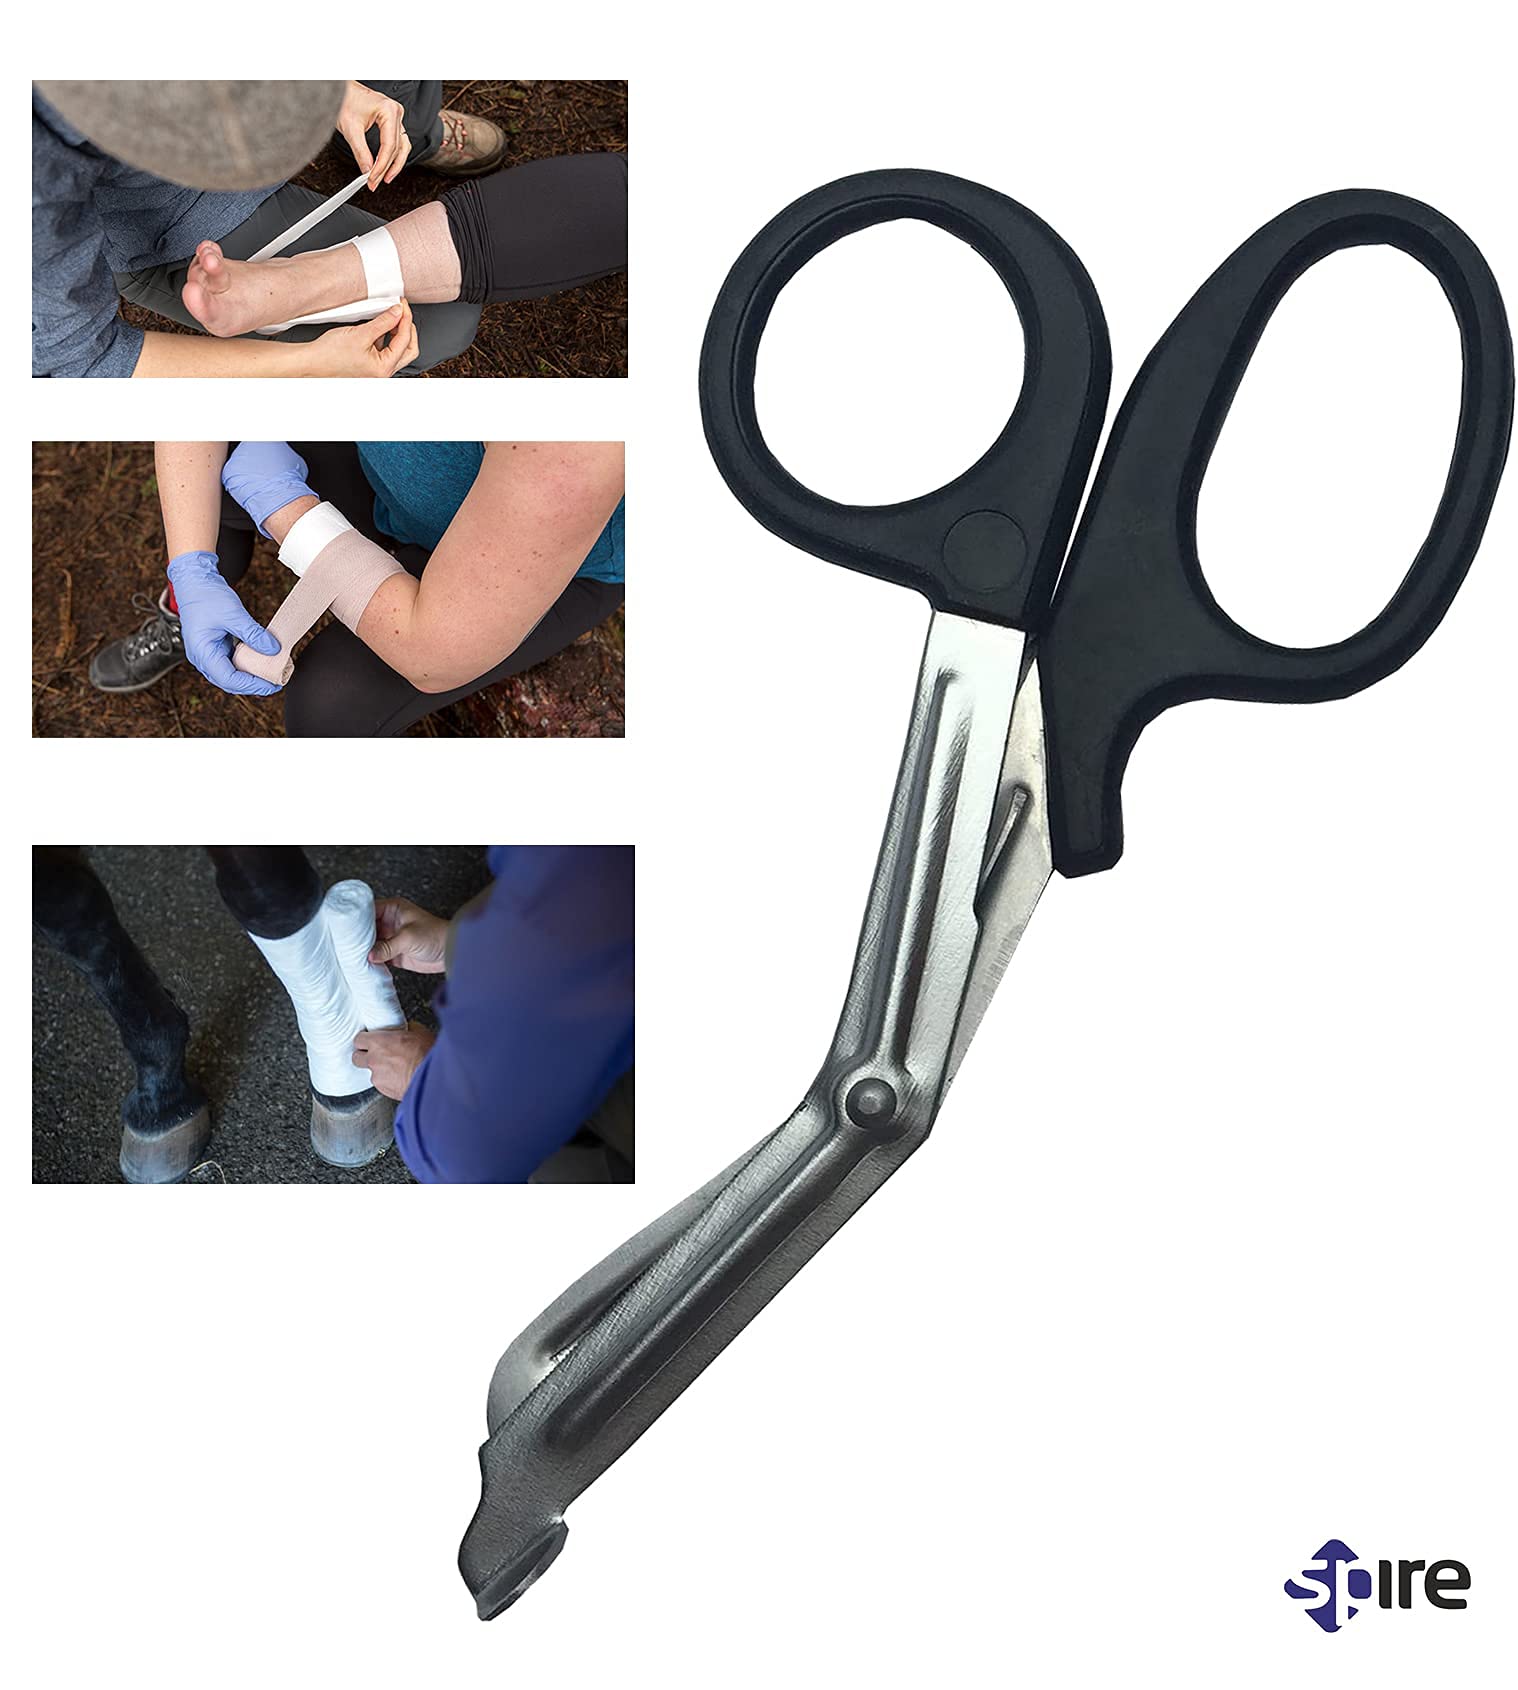 SPIRE Tuff Cut Utility Scissor, Bandage Scissors Trauma Shears for Nursing  Household, Military-Grade Scissors SHEARS 7.5